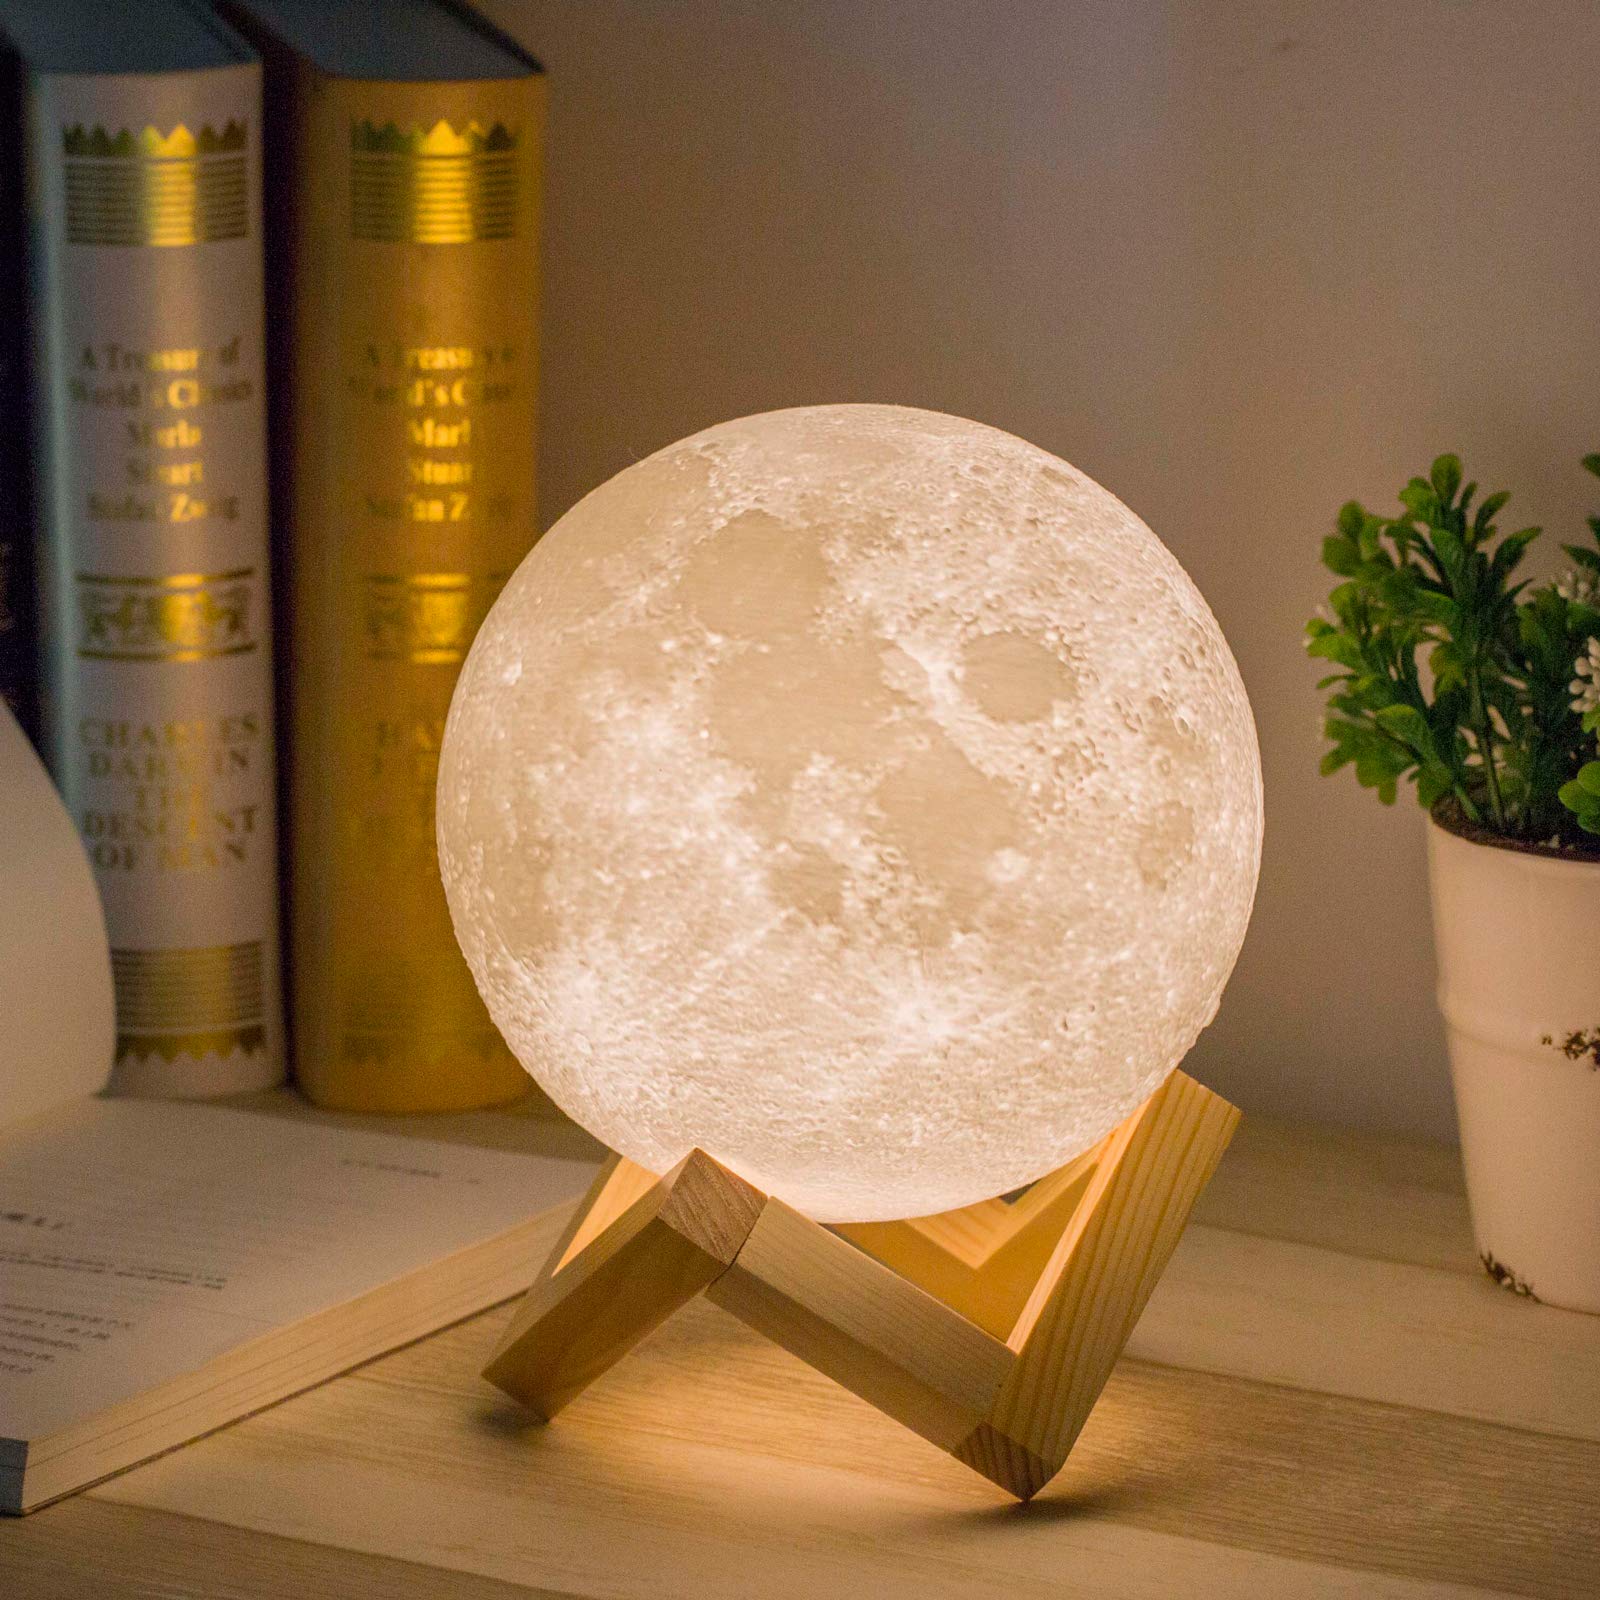 Mua Mydethun Moon Lamp, 5.9 inch - 3D Printed Lunar Lamp - Moon Light - Night Lights for Kids Room, Women, Home Decor, Gifting - USB Charging - Touch Control Brightness -